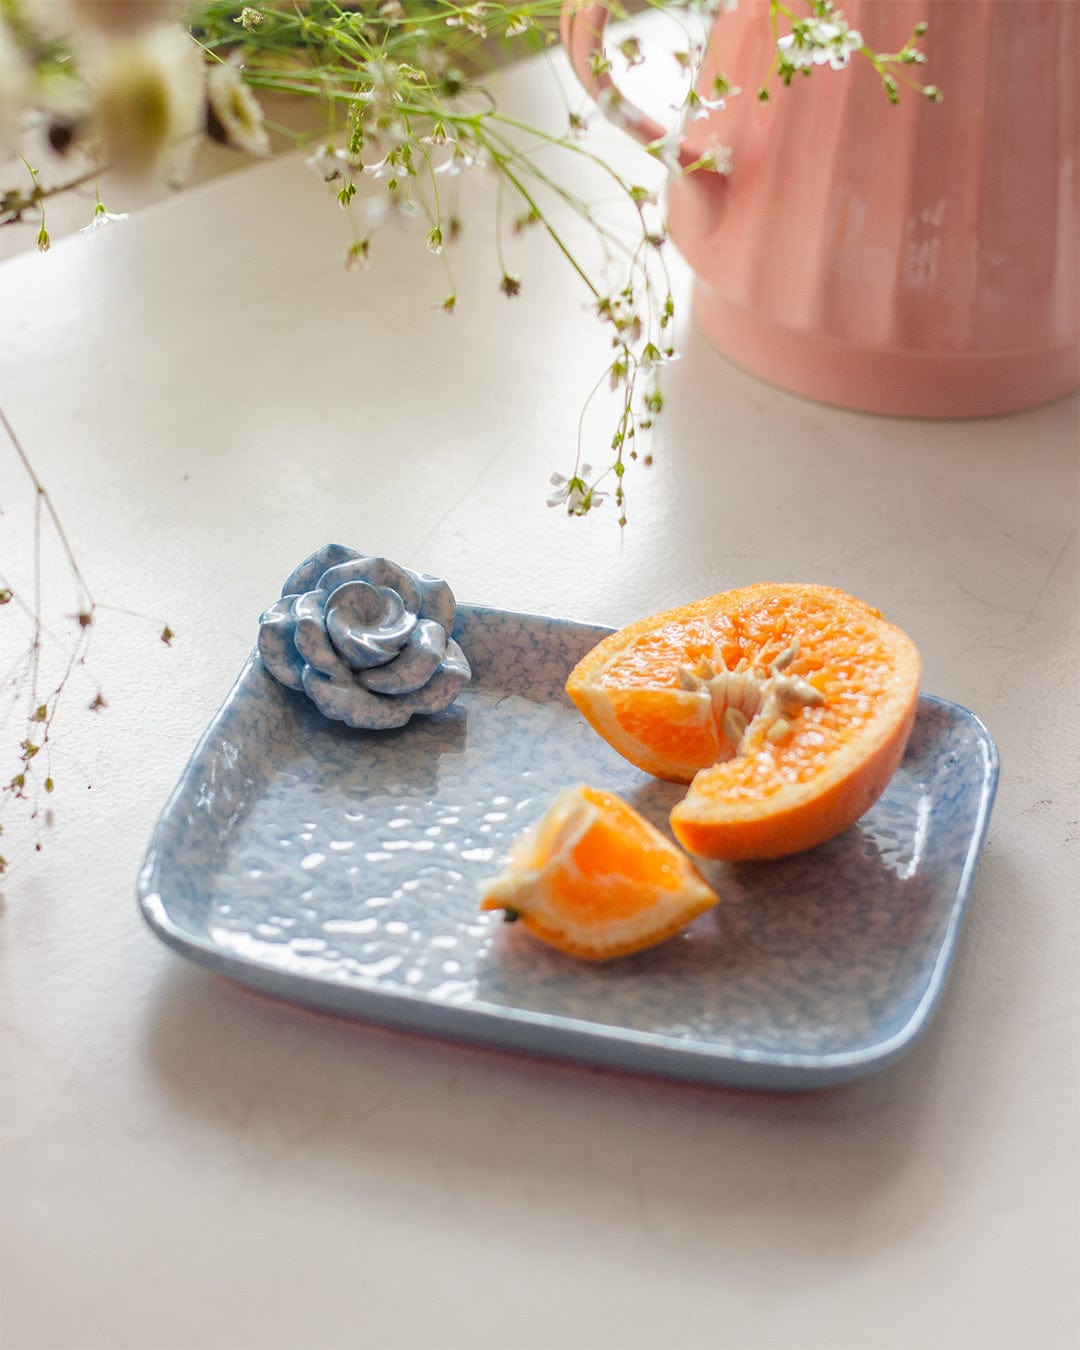 Speckled Serenity Handpainted Square Ceramic Platter